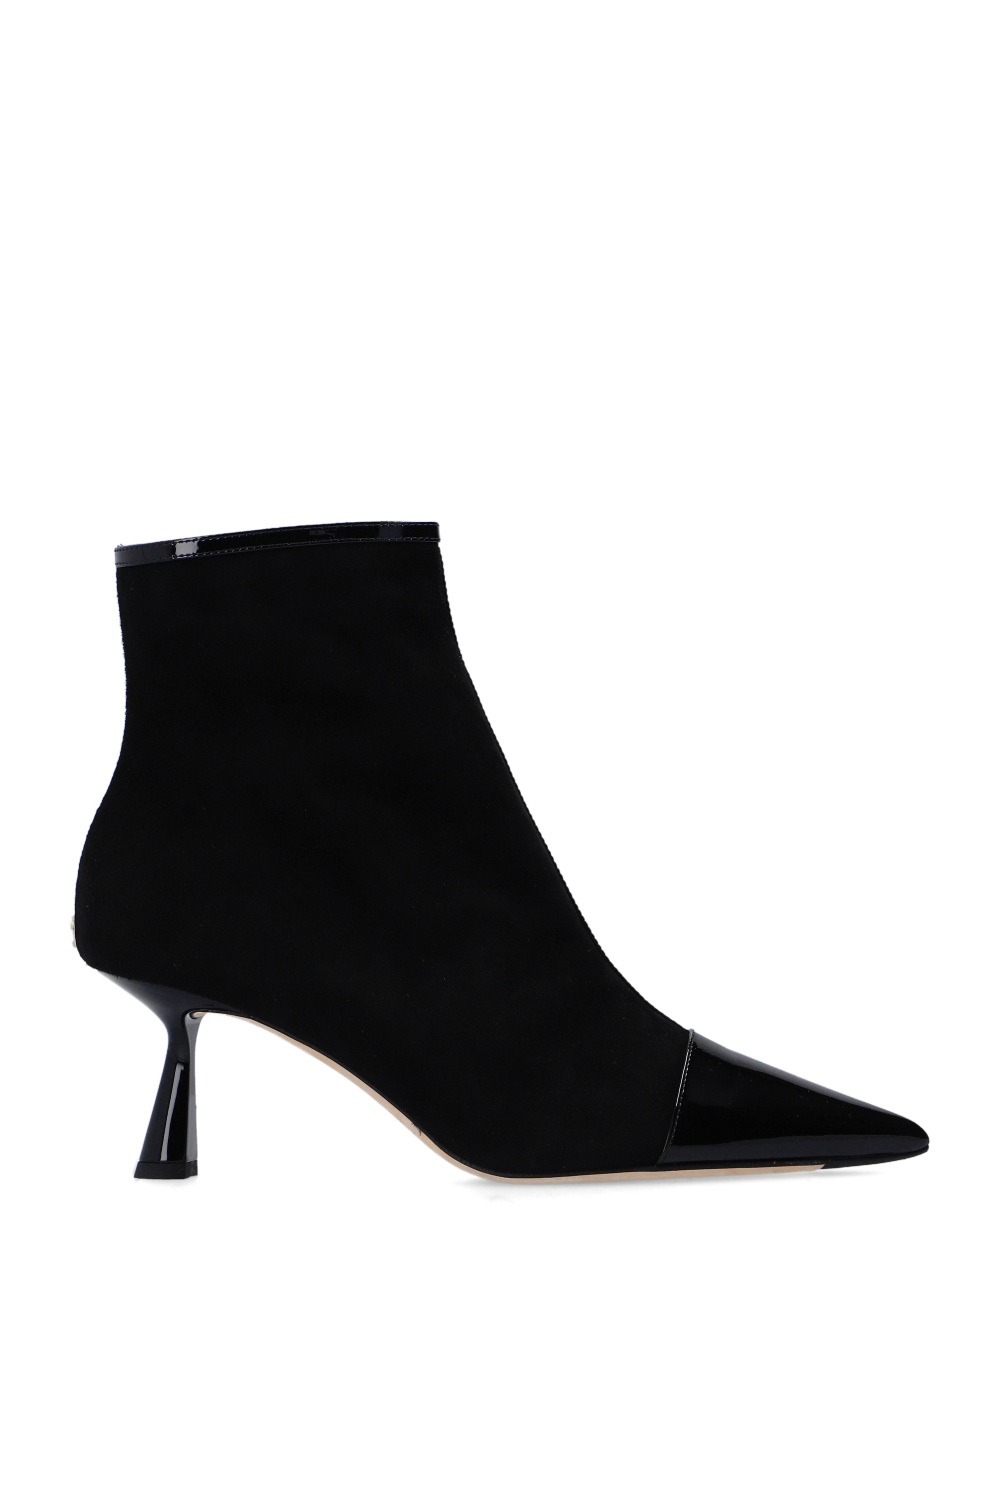 Louis Vuitton LV x YK Silhouette Ankle Boots - Vitkac shop online